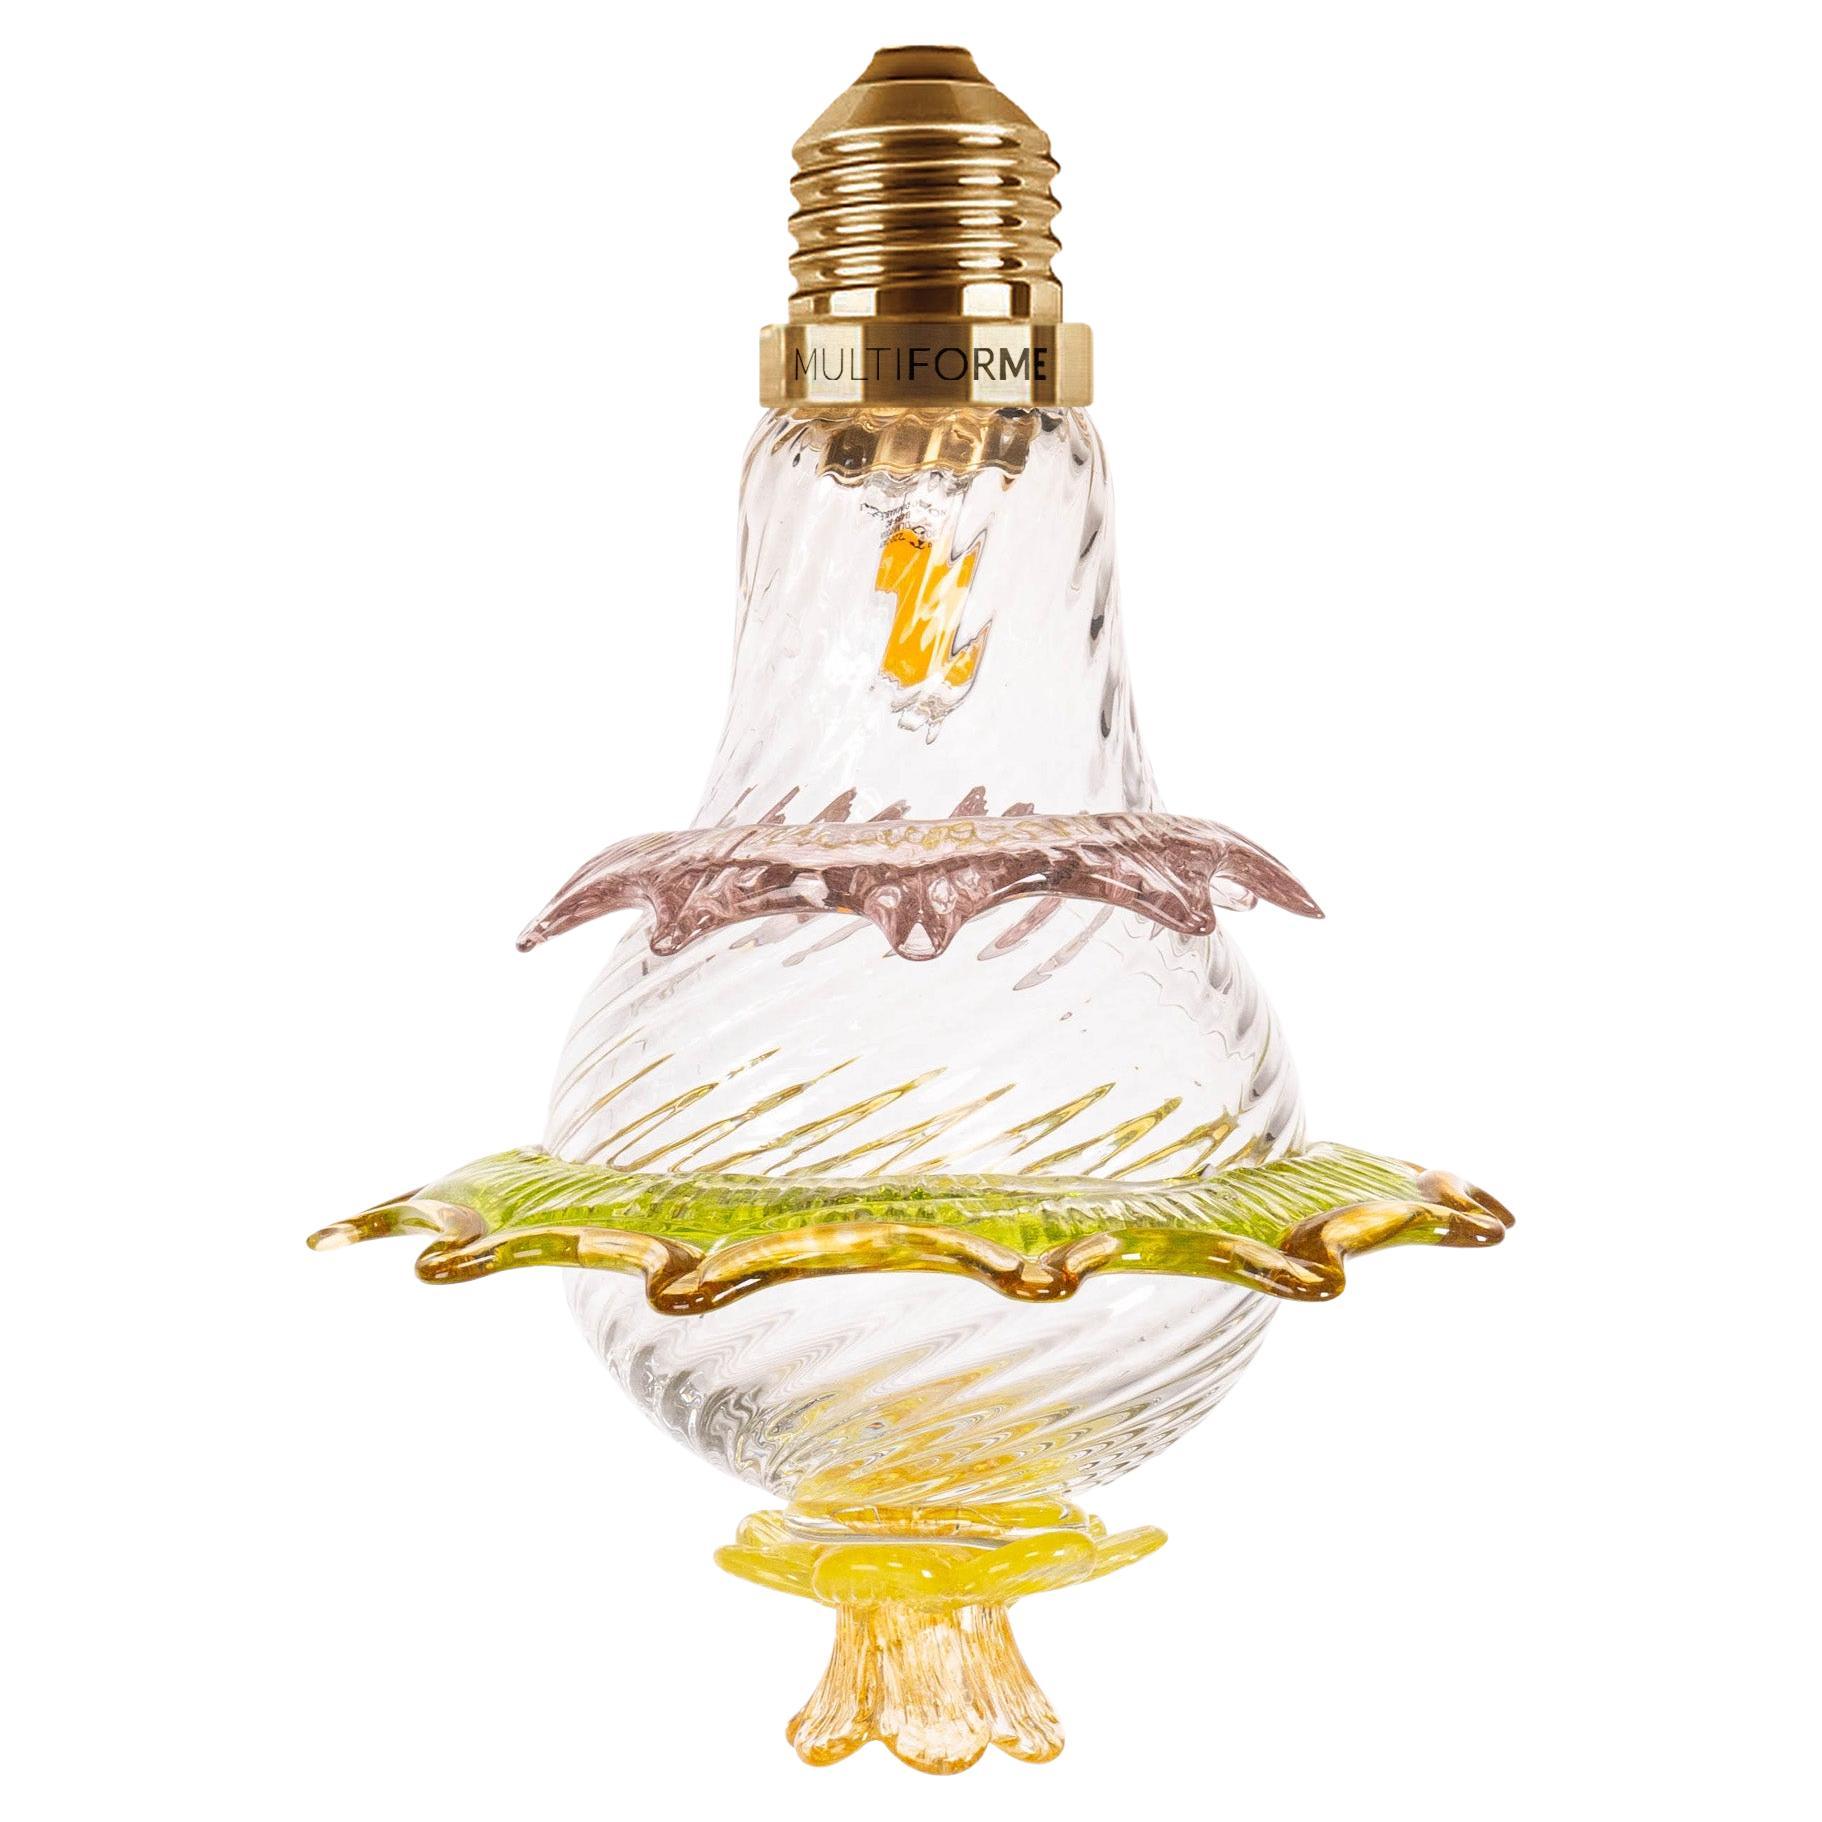 Artistic glass lightbulb chandelier Murano Bulb Marcantonio X Multiforme #04 For Sale